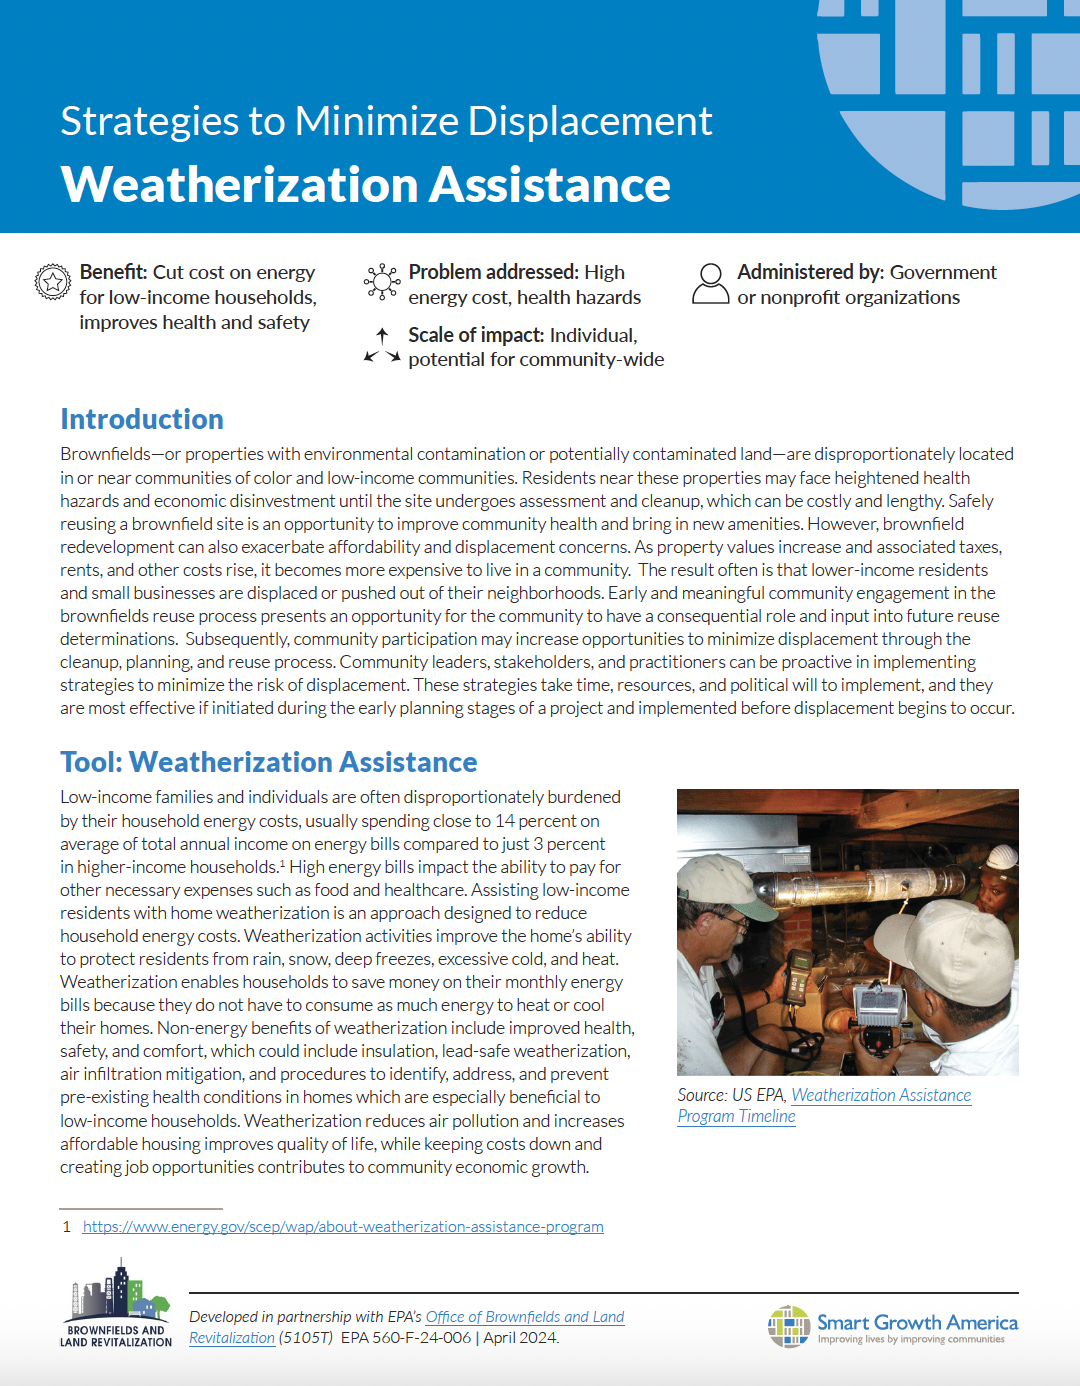 Strategies to Minimize Displacement: Weatherization